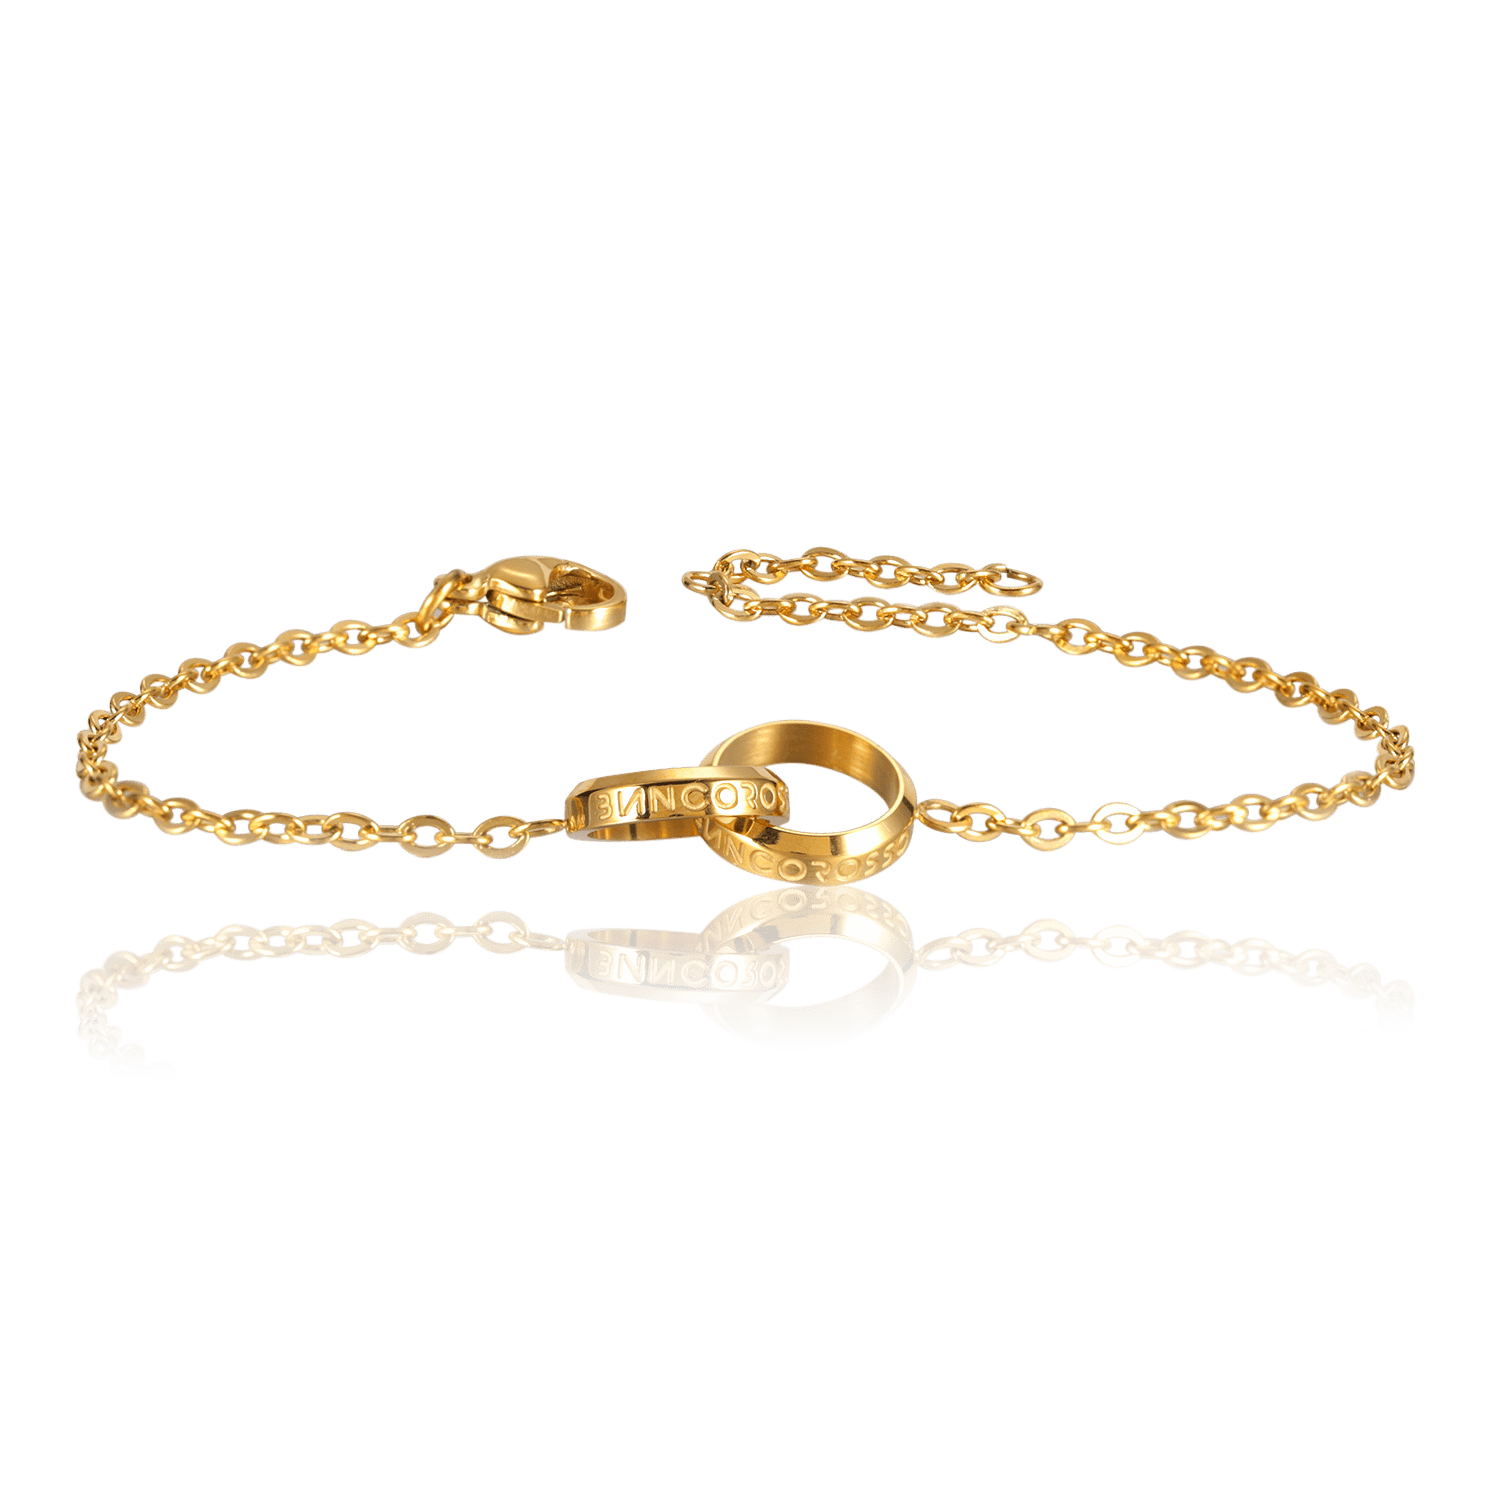 bianco rosso Bracelets For Your Birthday - Eternity Bracelet cyprus greece jewelry gift free shipping europe worldwide